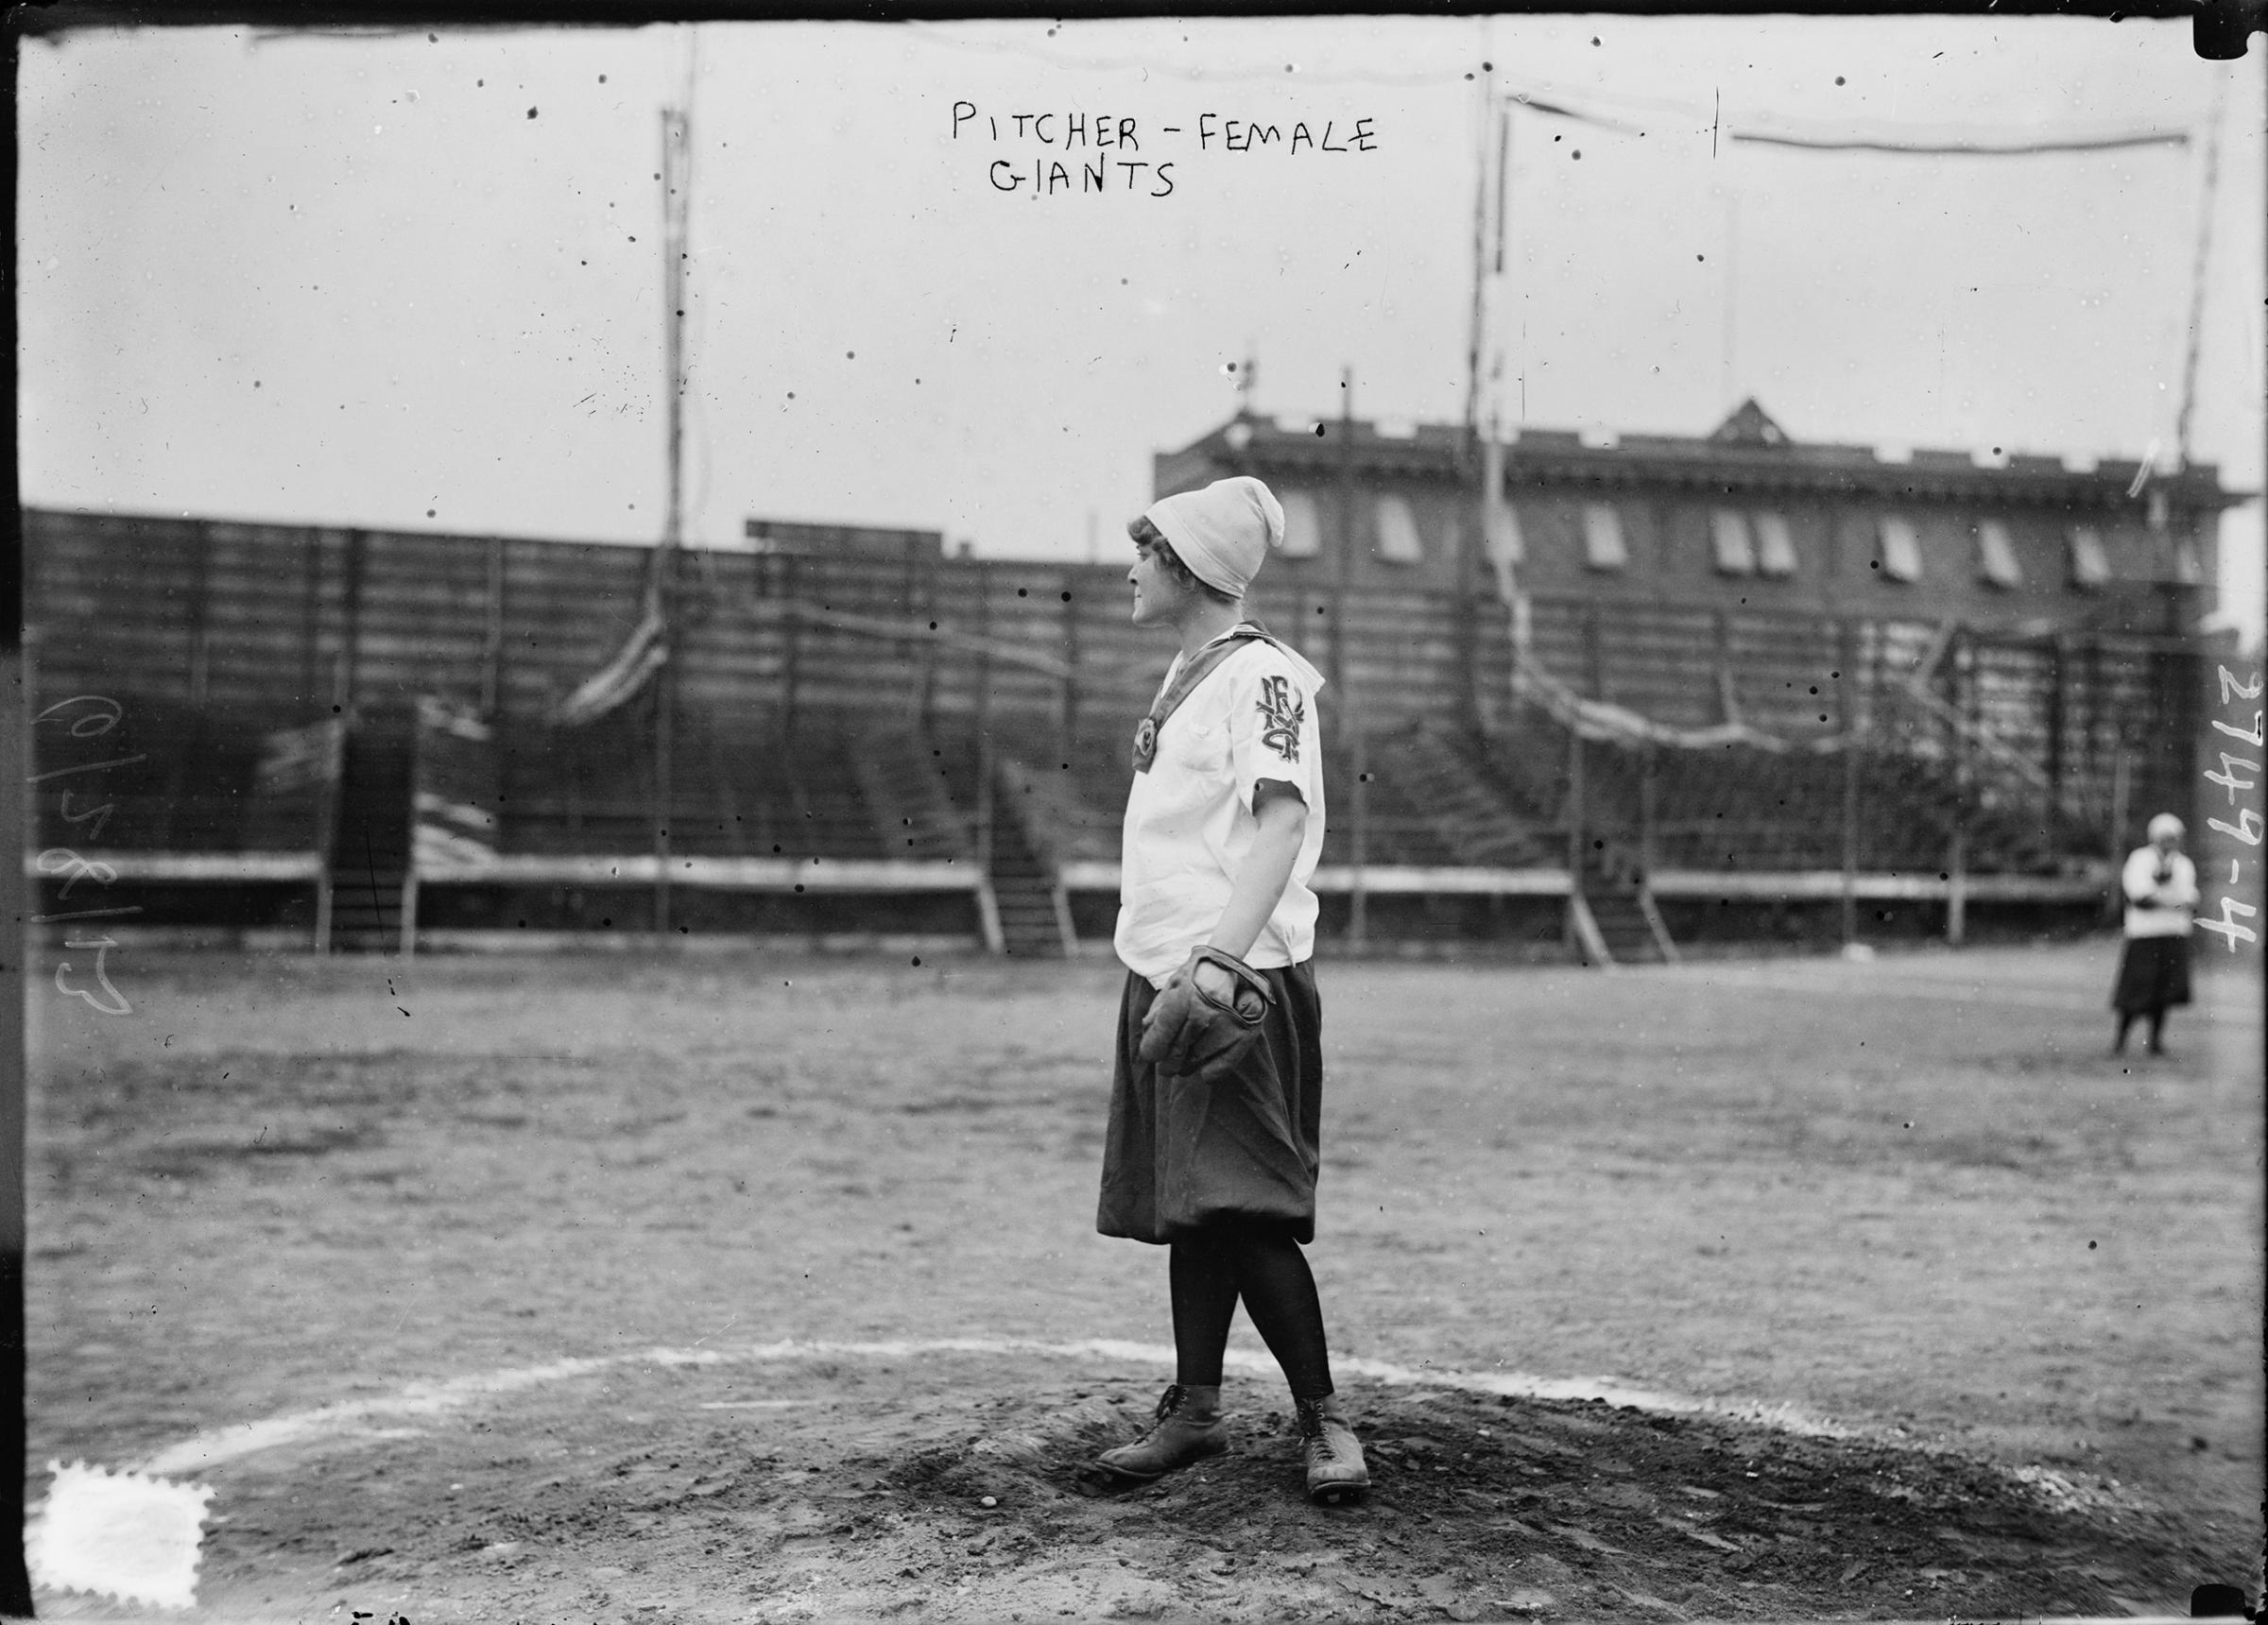 The New York Female Giants, circa 1913.